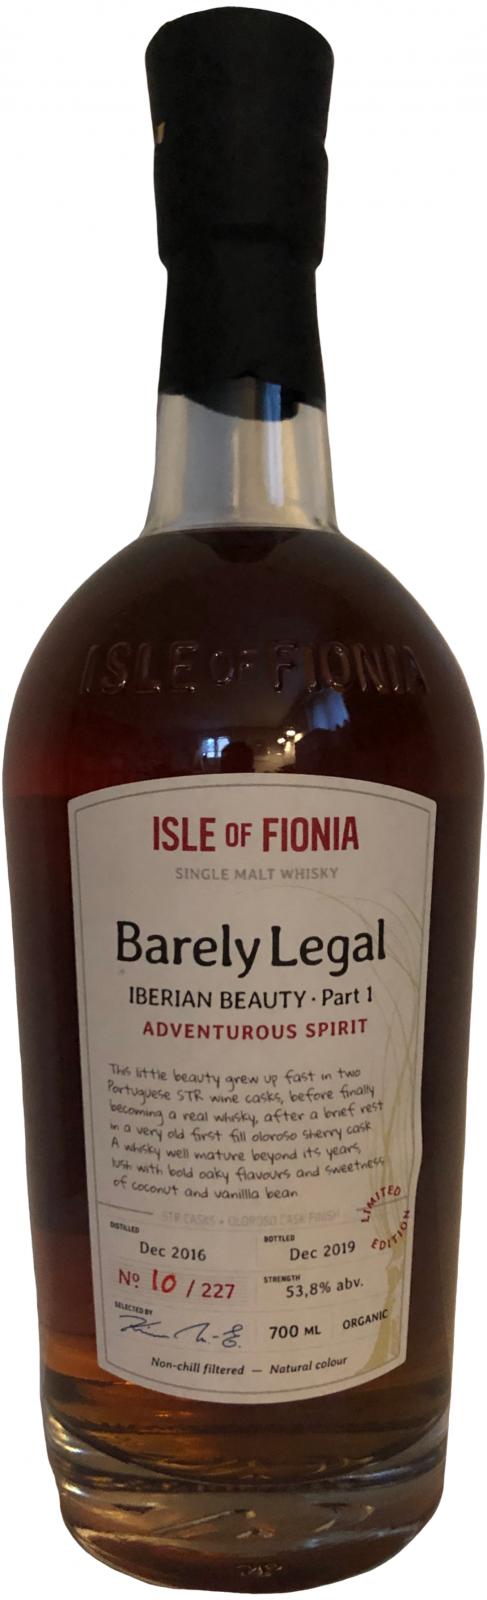 Isle of Fionia 2016 - Barely Legal Adventurous Spirit 3 Year Old 2019 Release Single Malt Whisky | 700ML